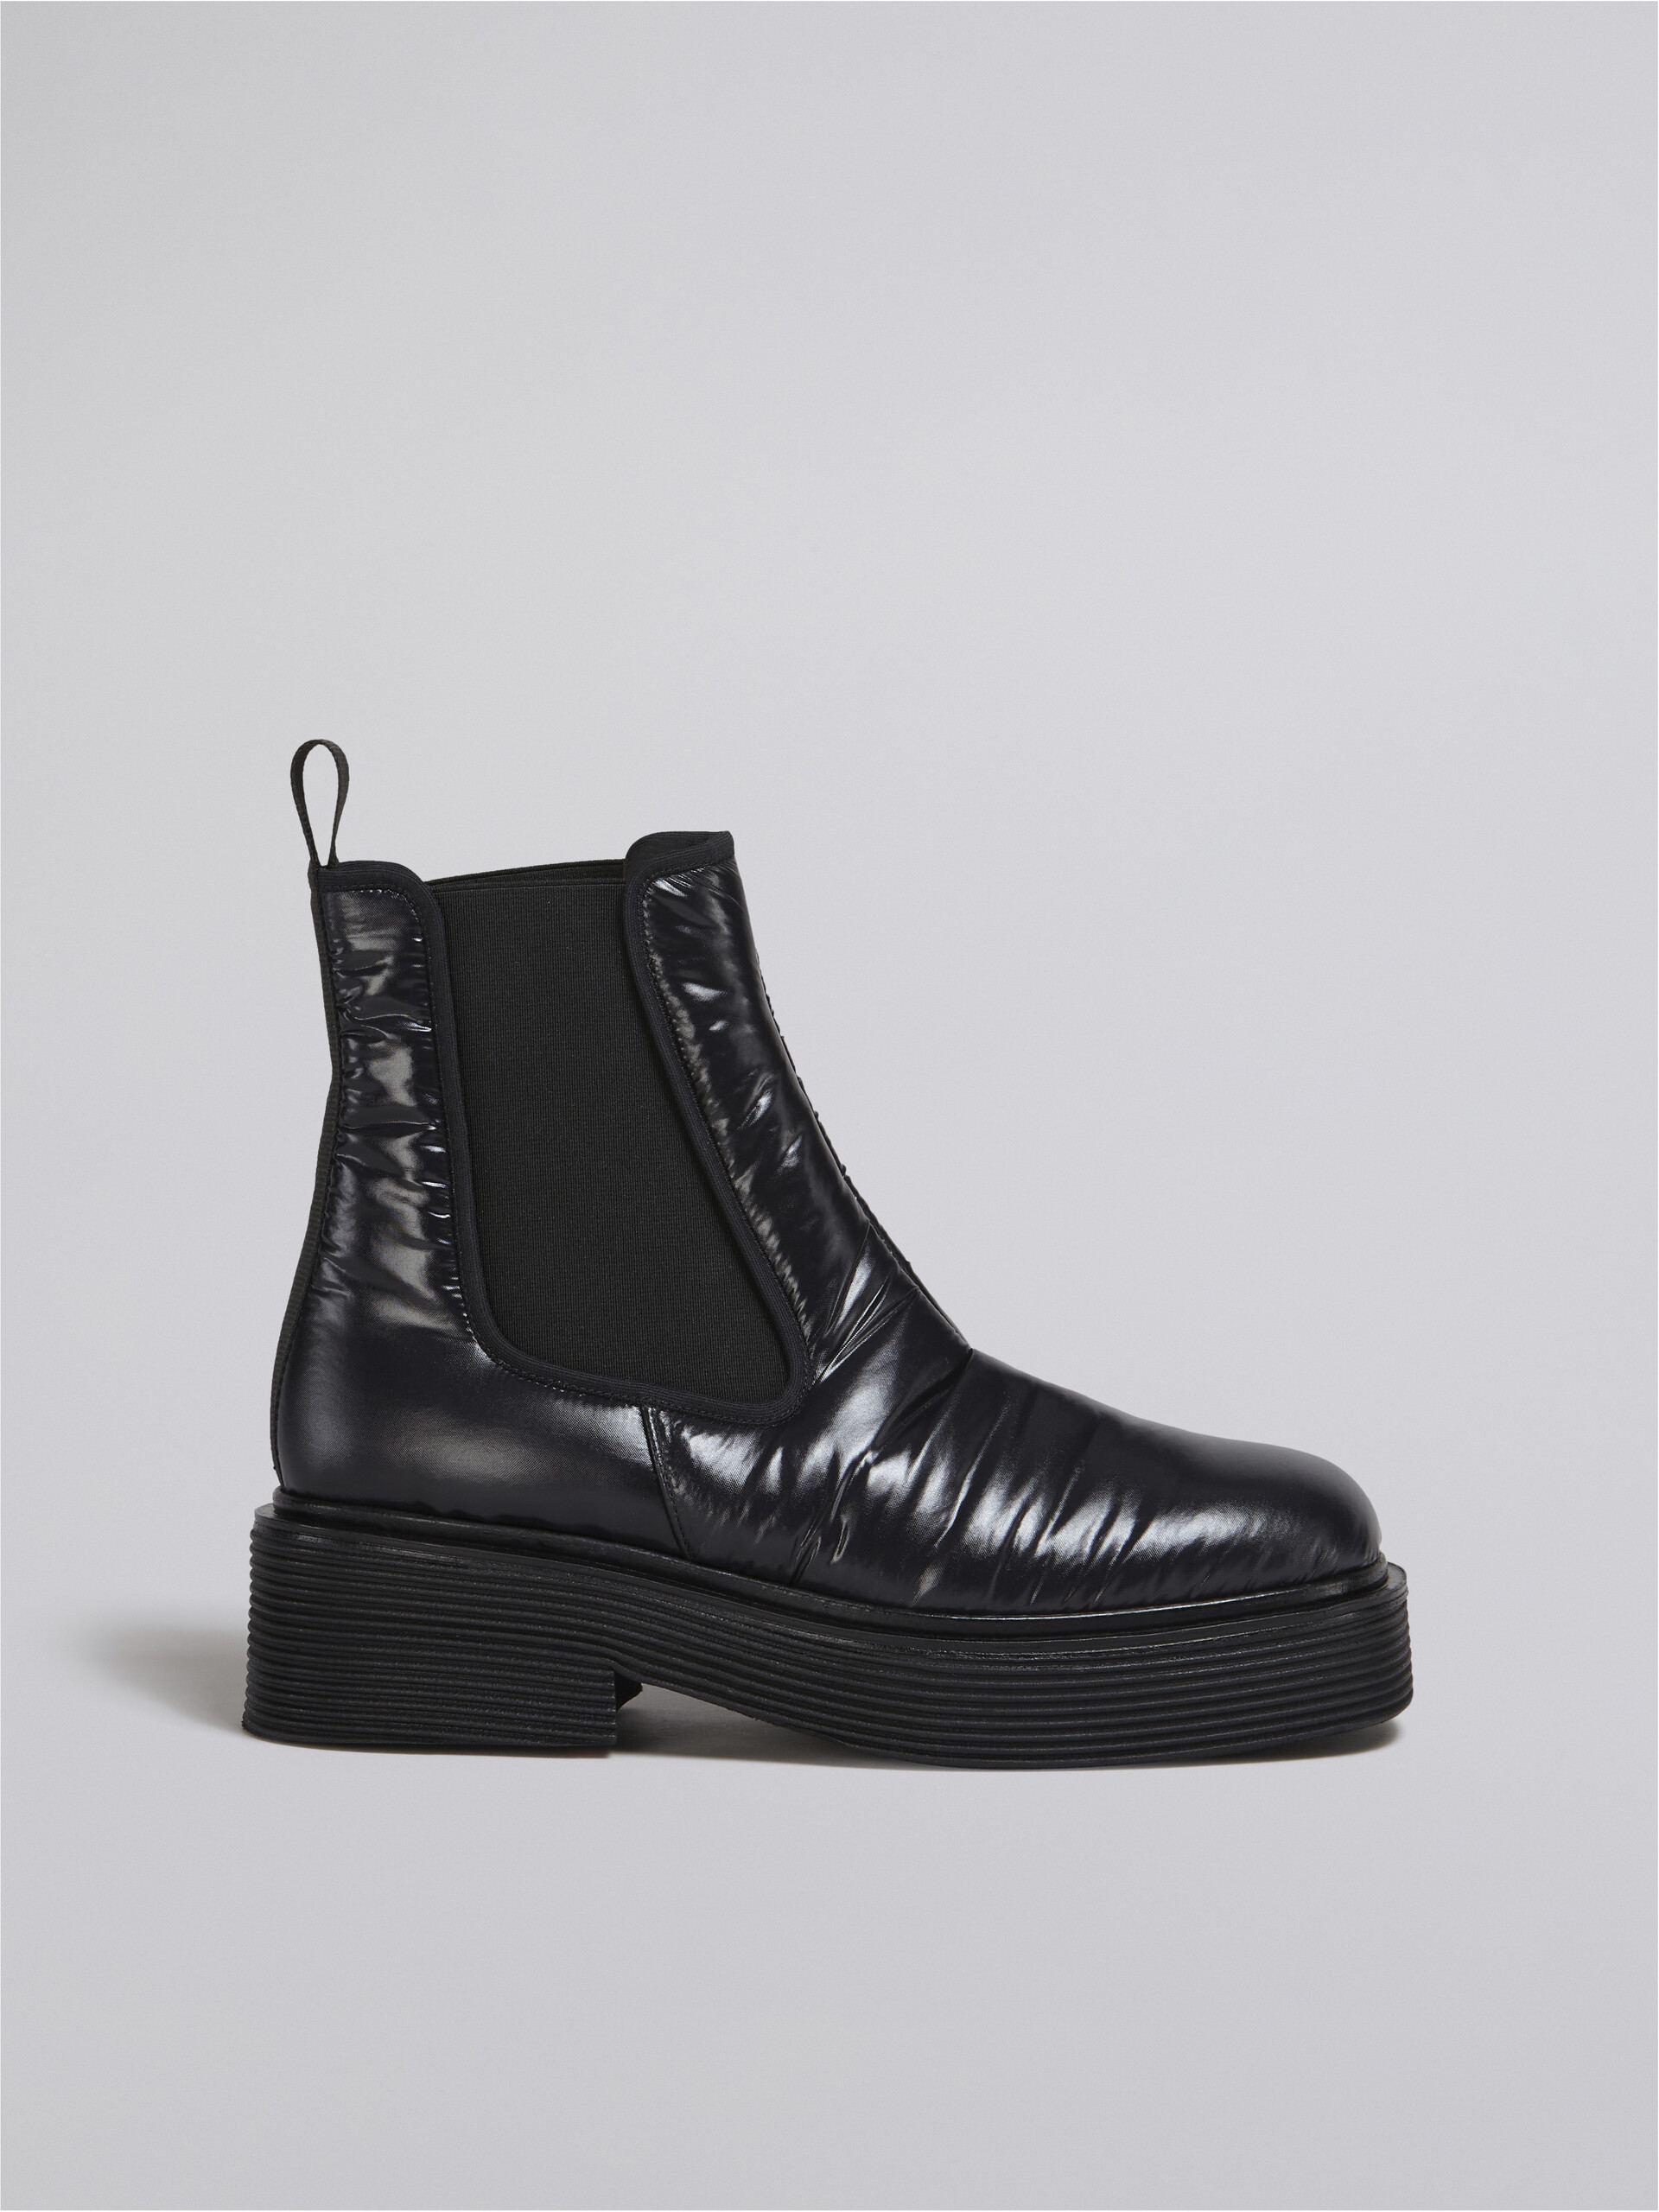 Nylon Chelsea boot - Boots - Image 1